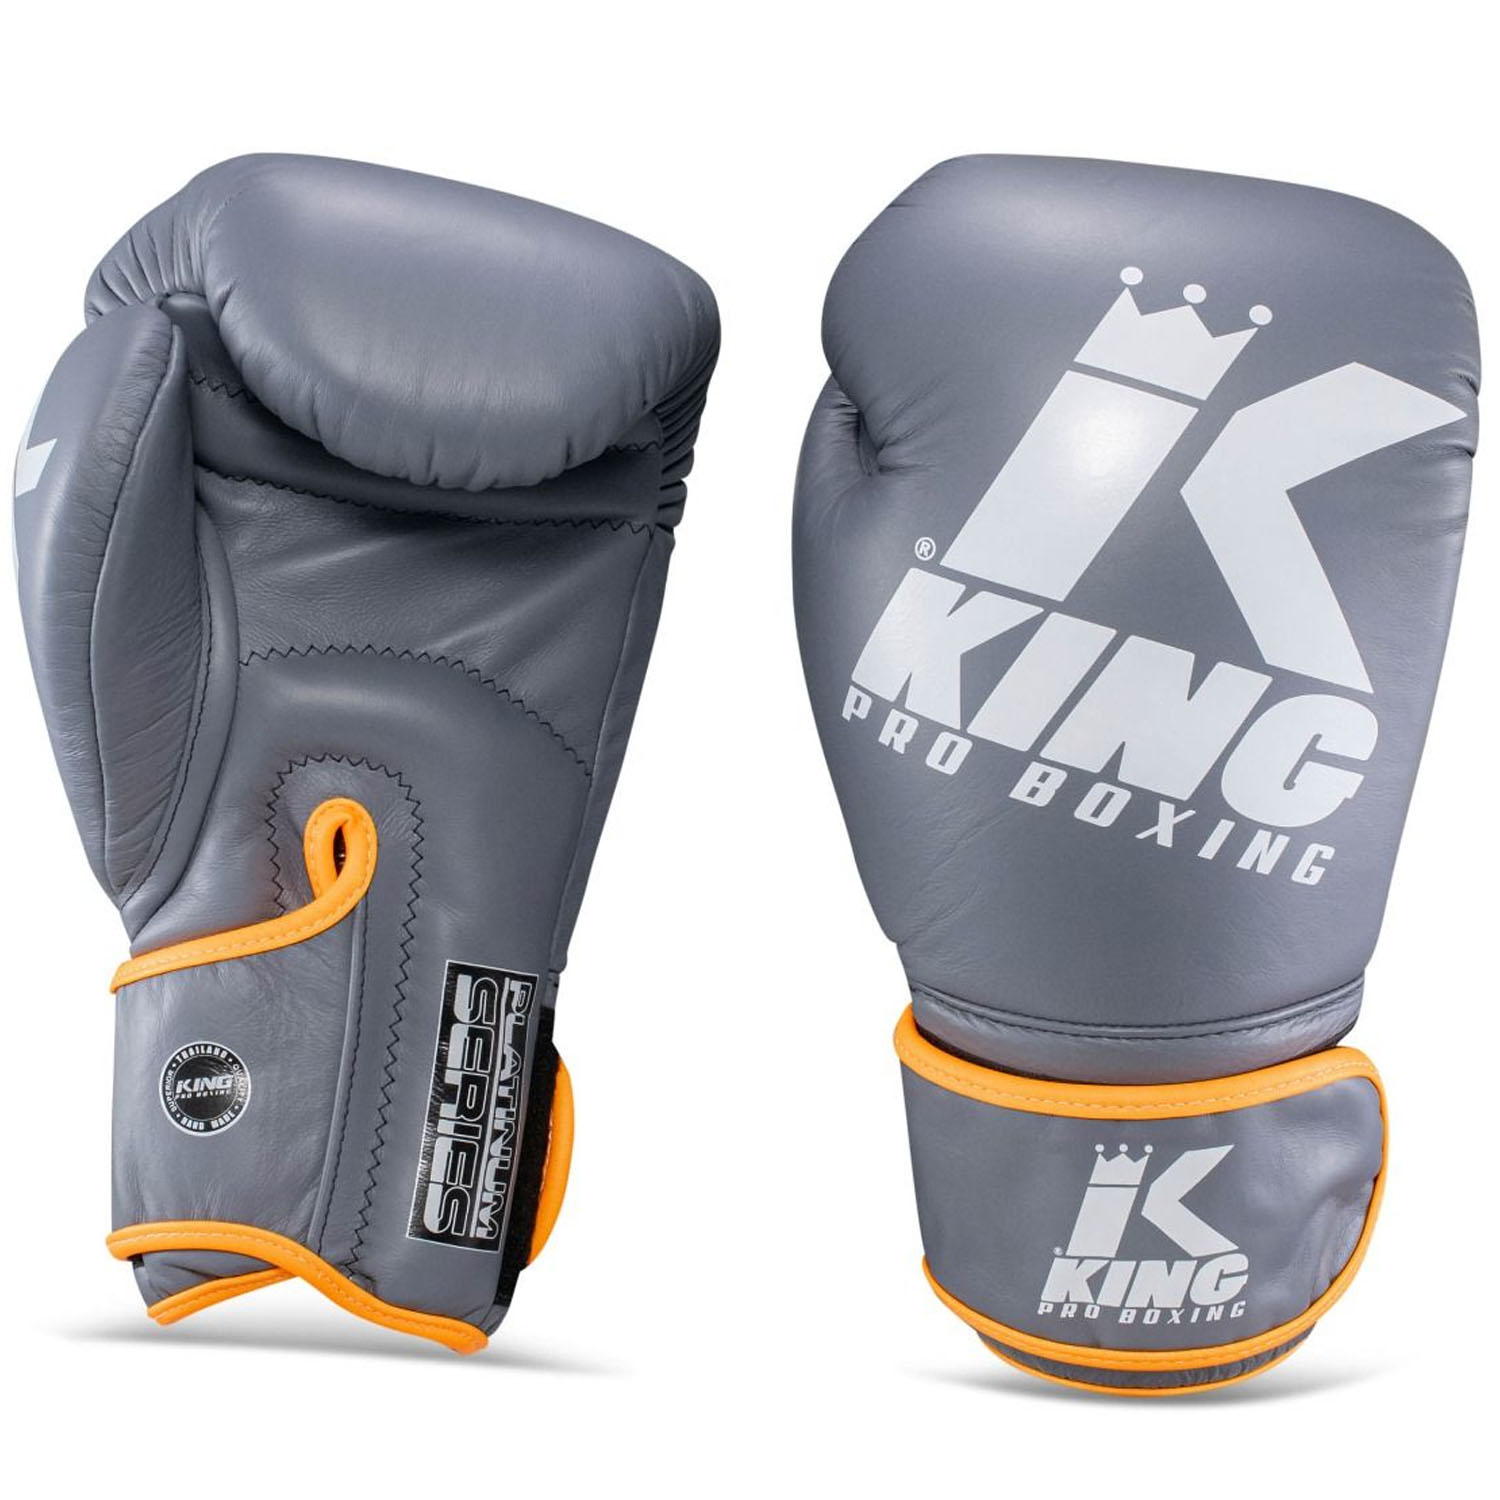 KING PRO BOXING Boxing Gloves, Platinum, 6, grey, 12 Oz